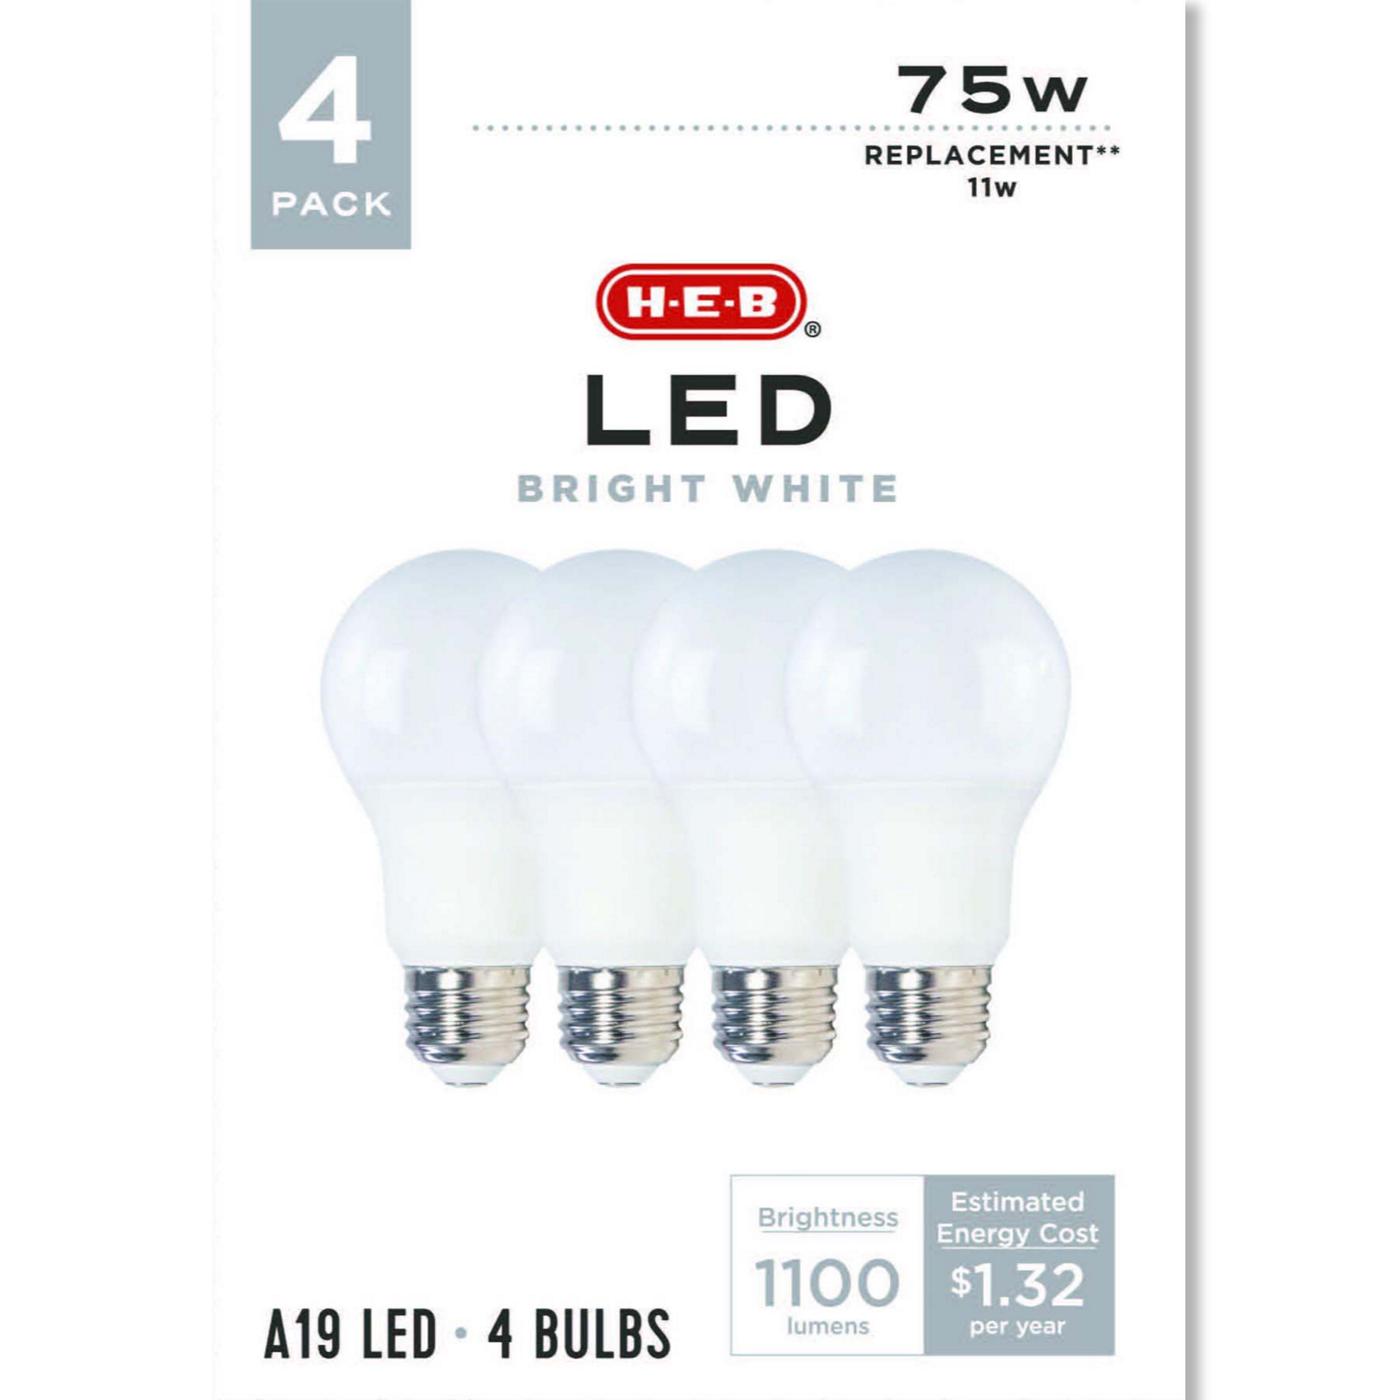 H-E-B A19 75-Watt LED Light Bulbs - Bright White; image 1 of 2